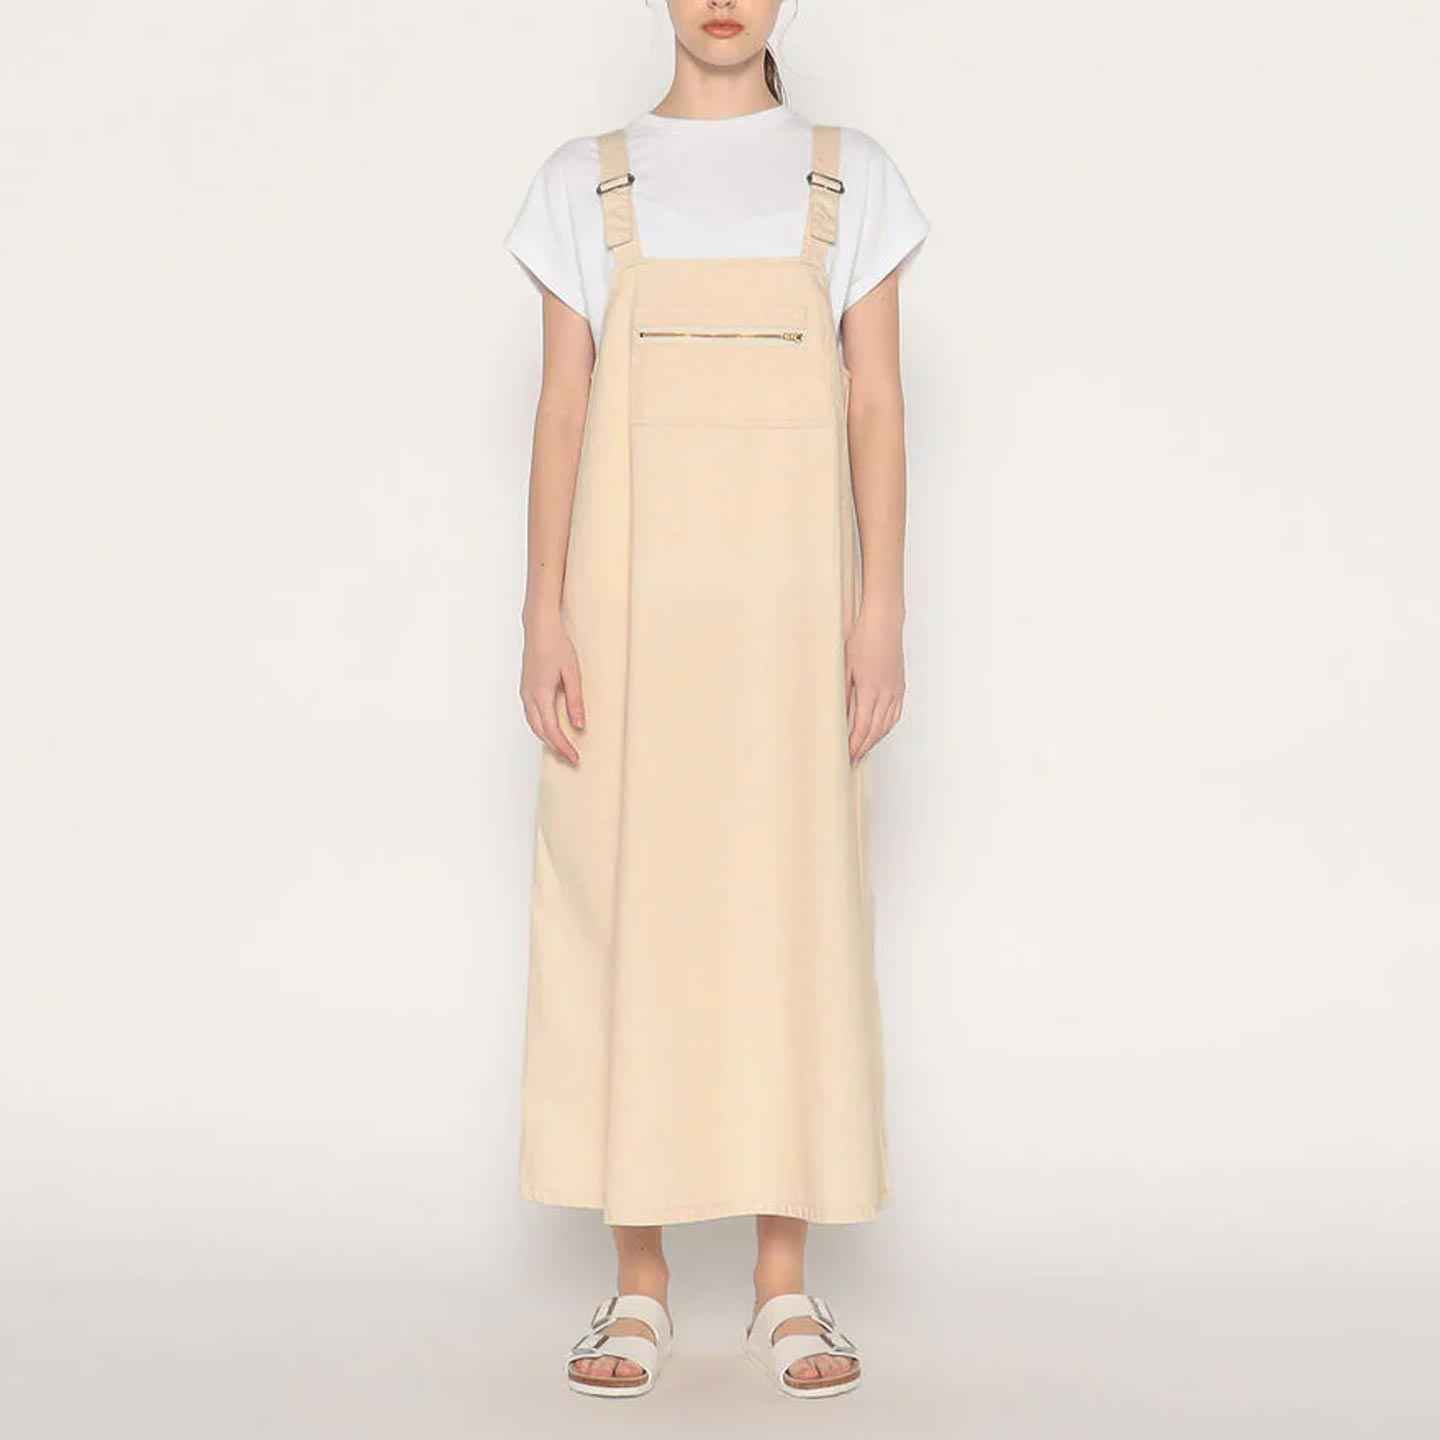 KATSURAGI Cotton Overalls Skirt  Danton